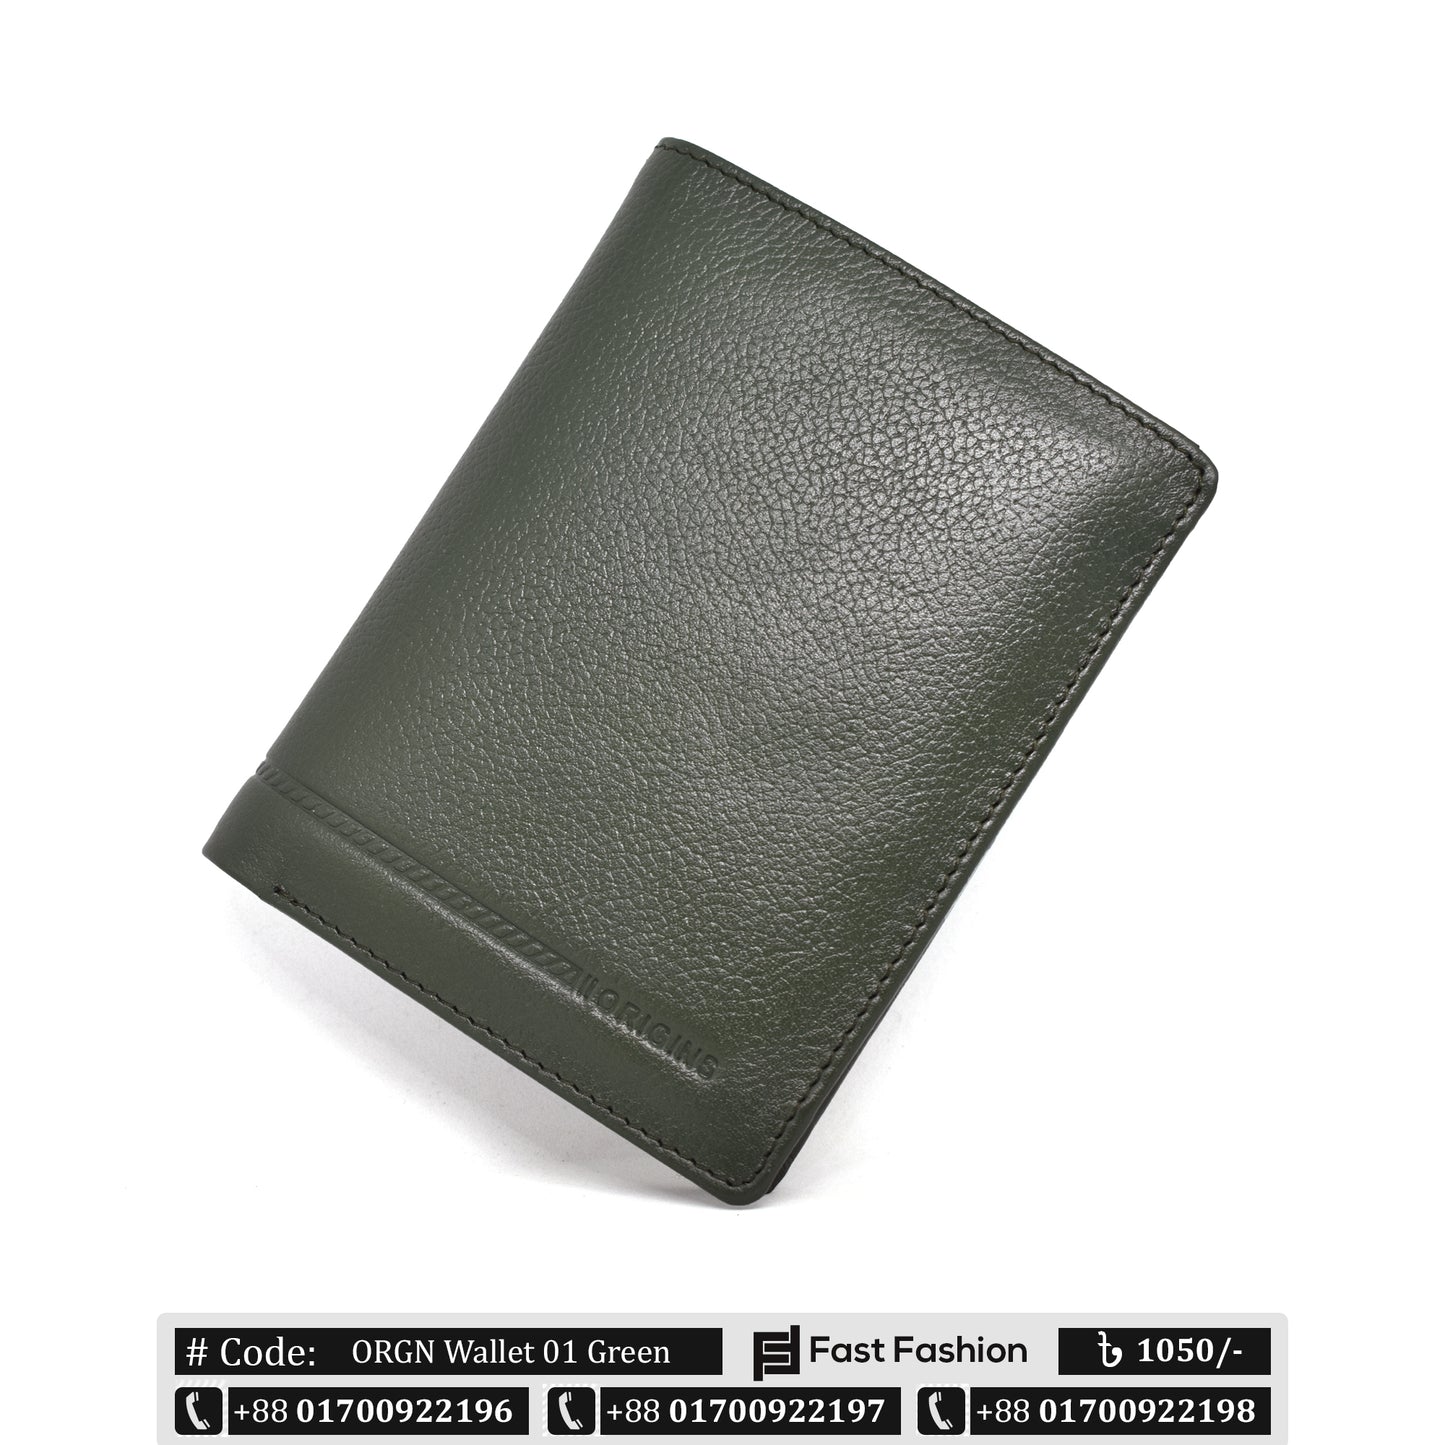 4 Part Pocket Size Premium Quality Leather Wallet for Men | ORGN Wallet 01